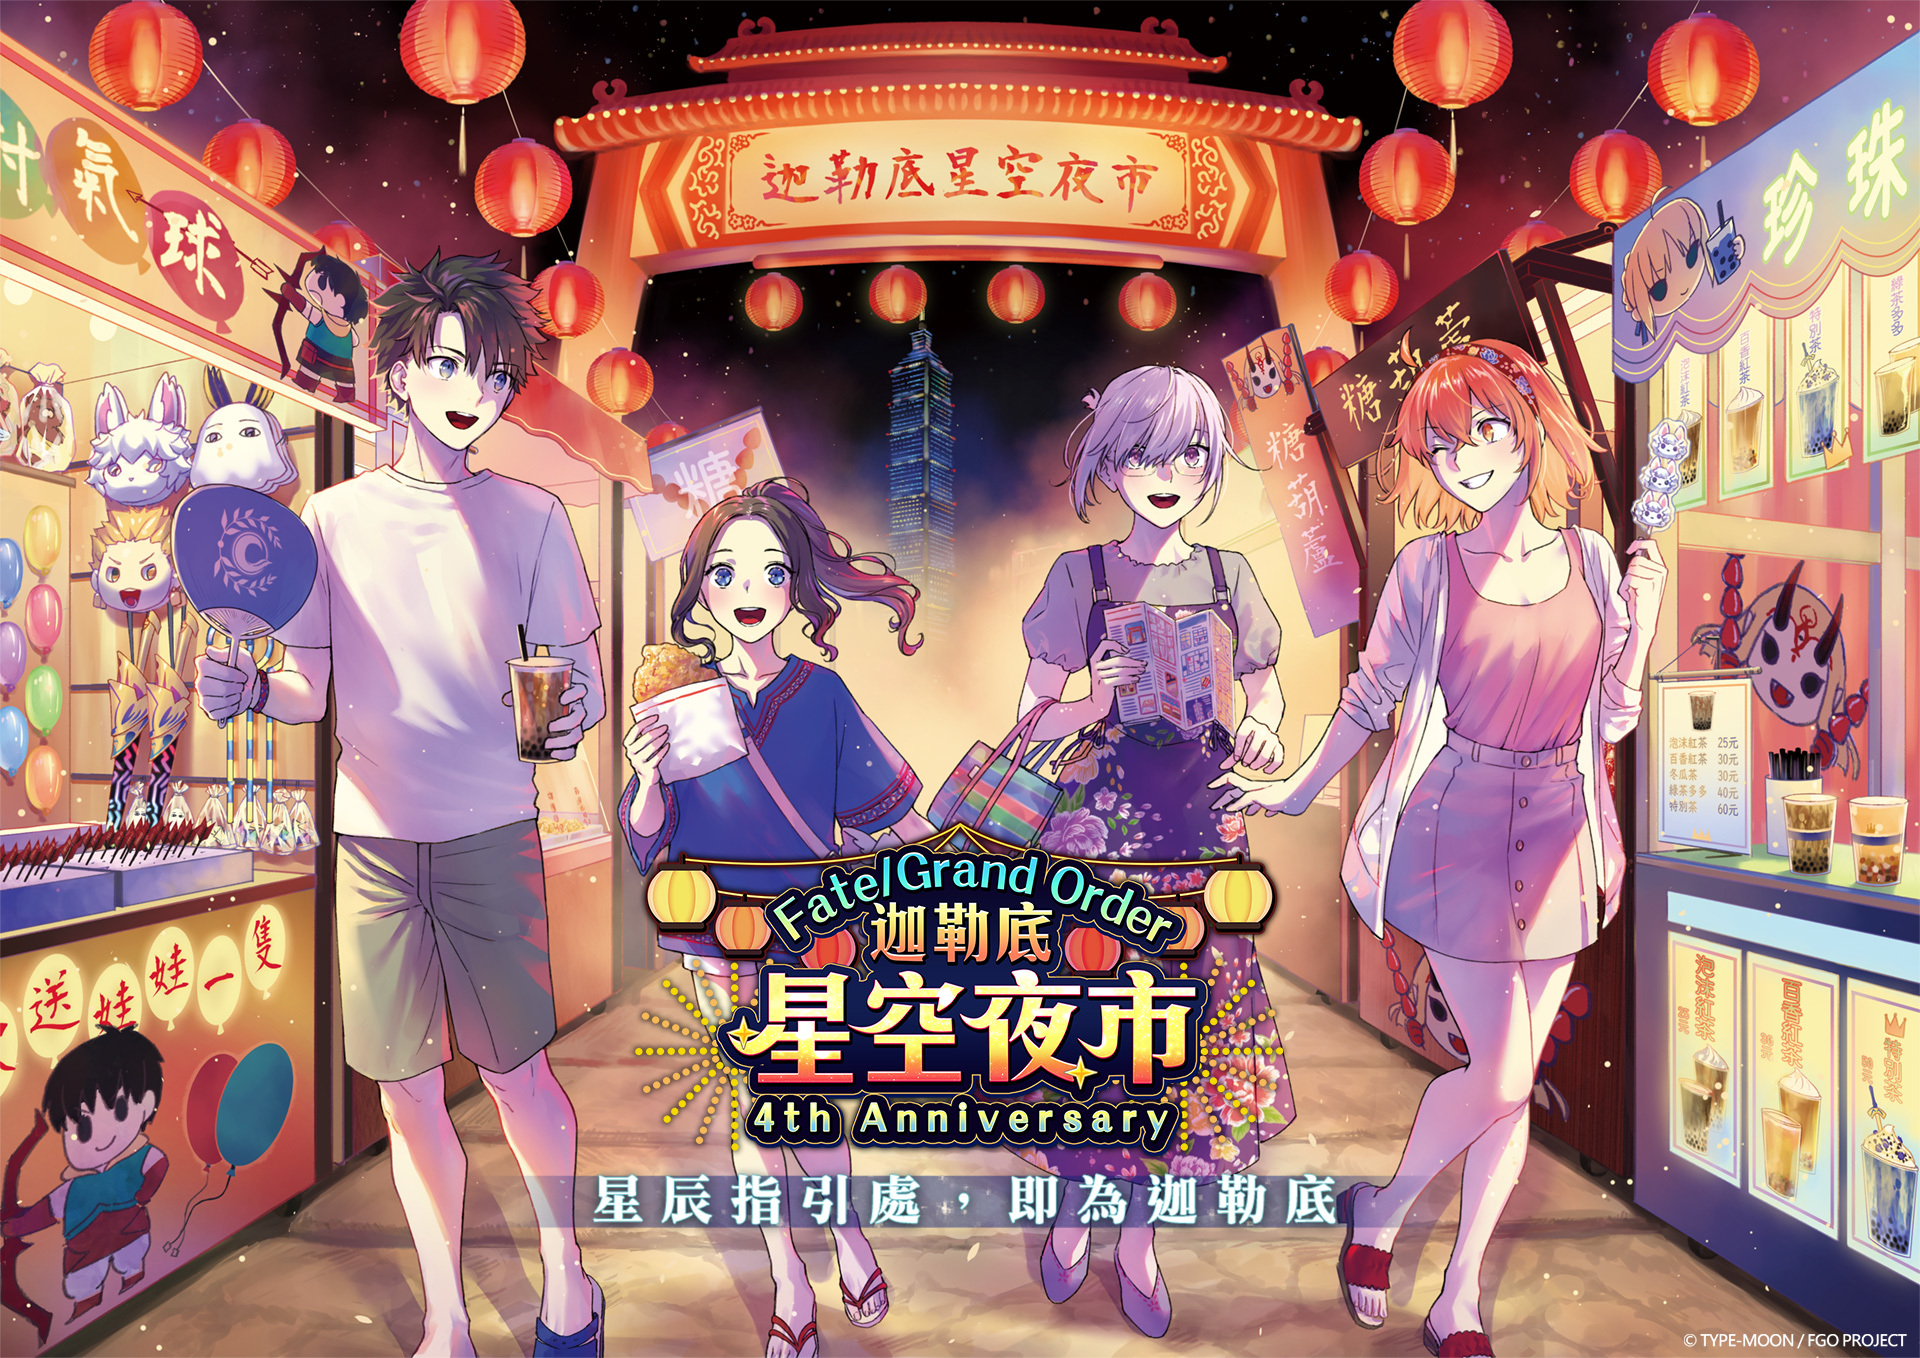 《Fate/Grand Order》繁中版四周年庆典5 月登场携手台湾夜市推出一系列活动